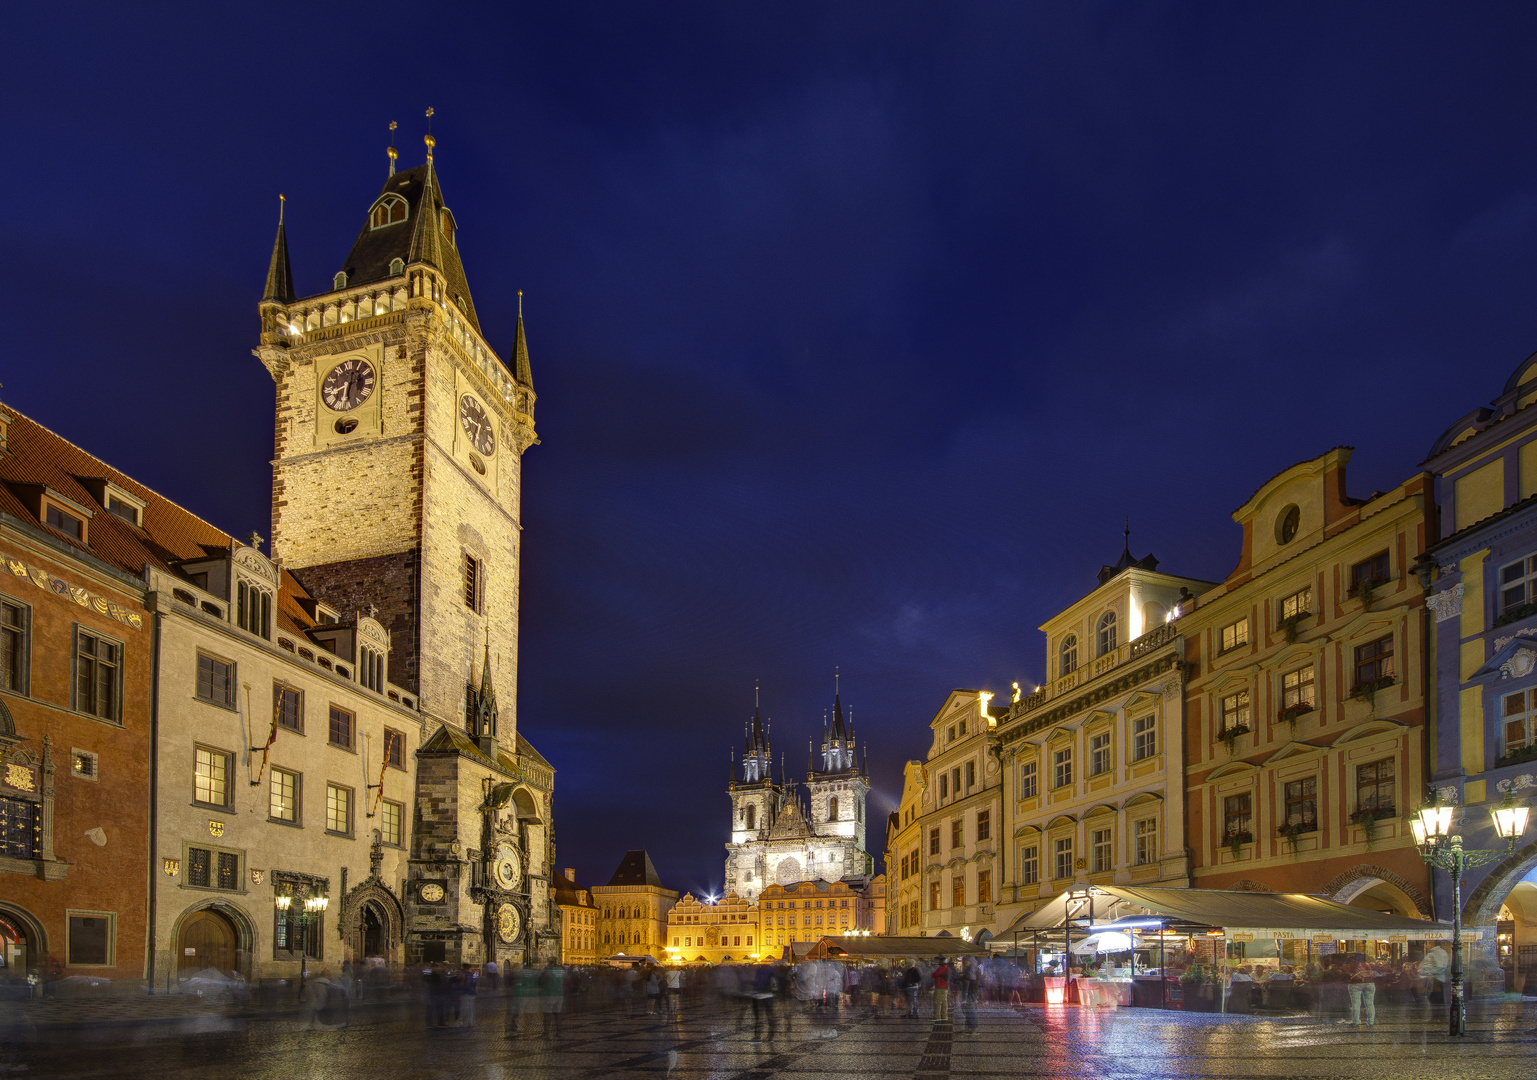 Praha-Staré Mesto - Staromestské námestí (Old Town Square) - Staromestská radnice (Town Hall) - 40